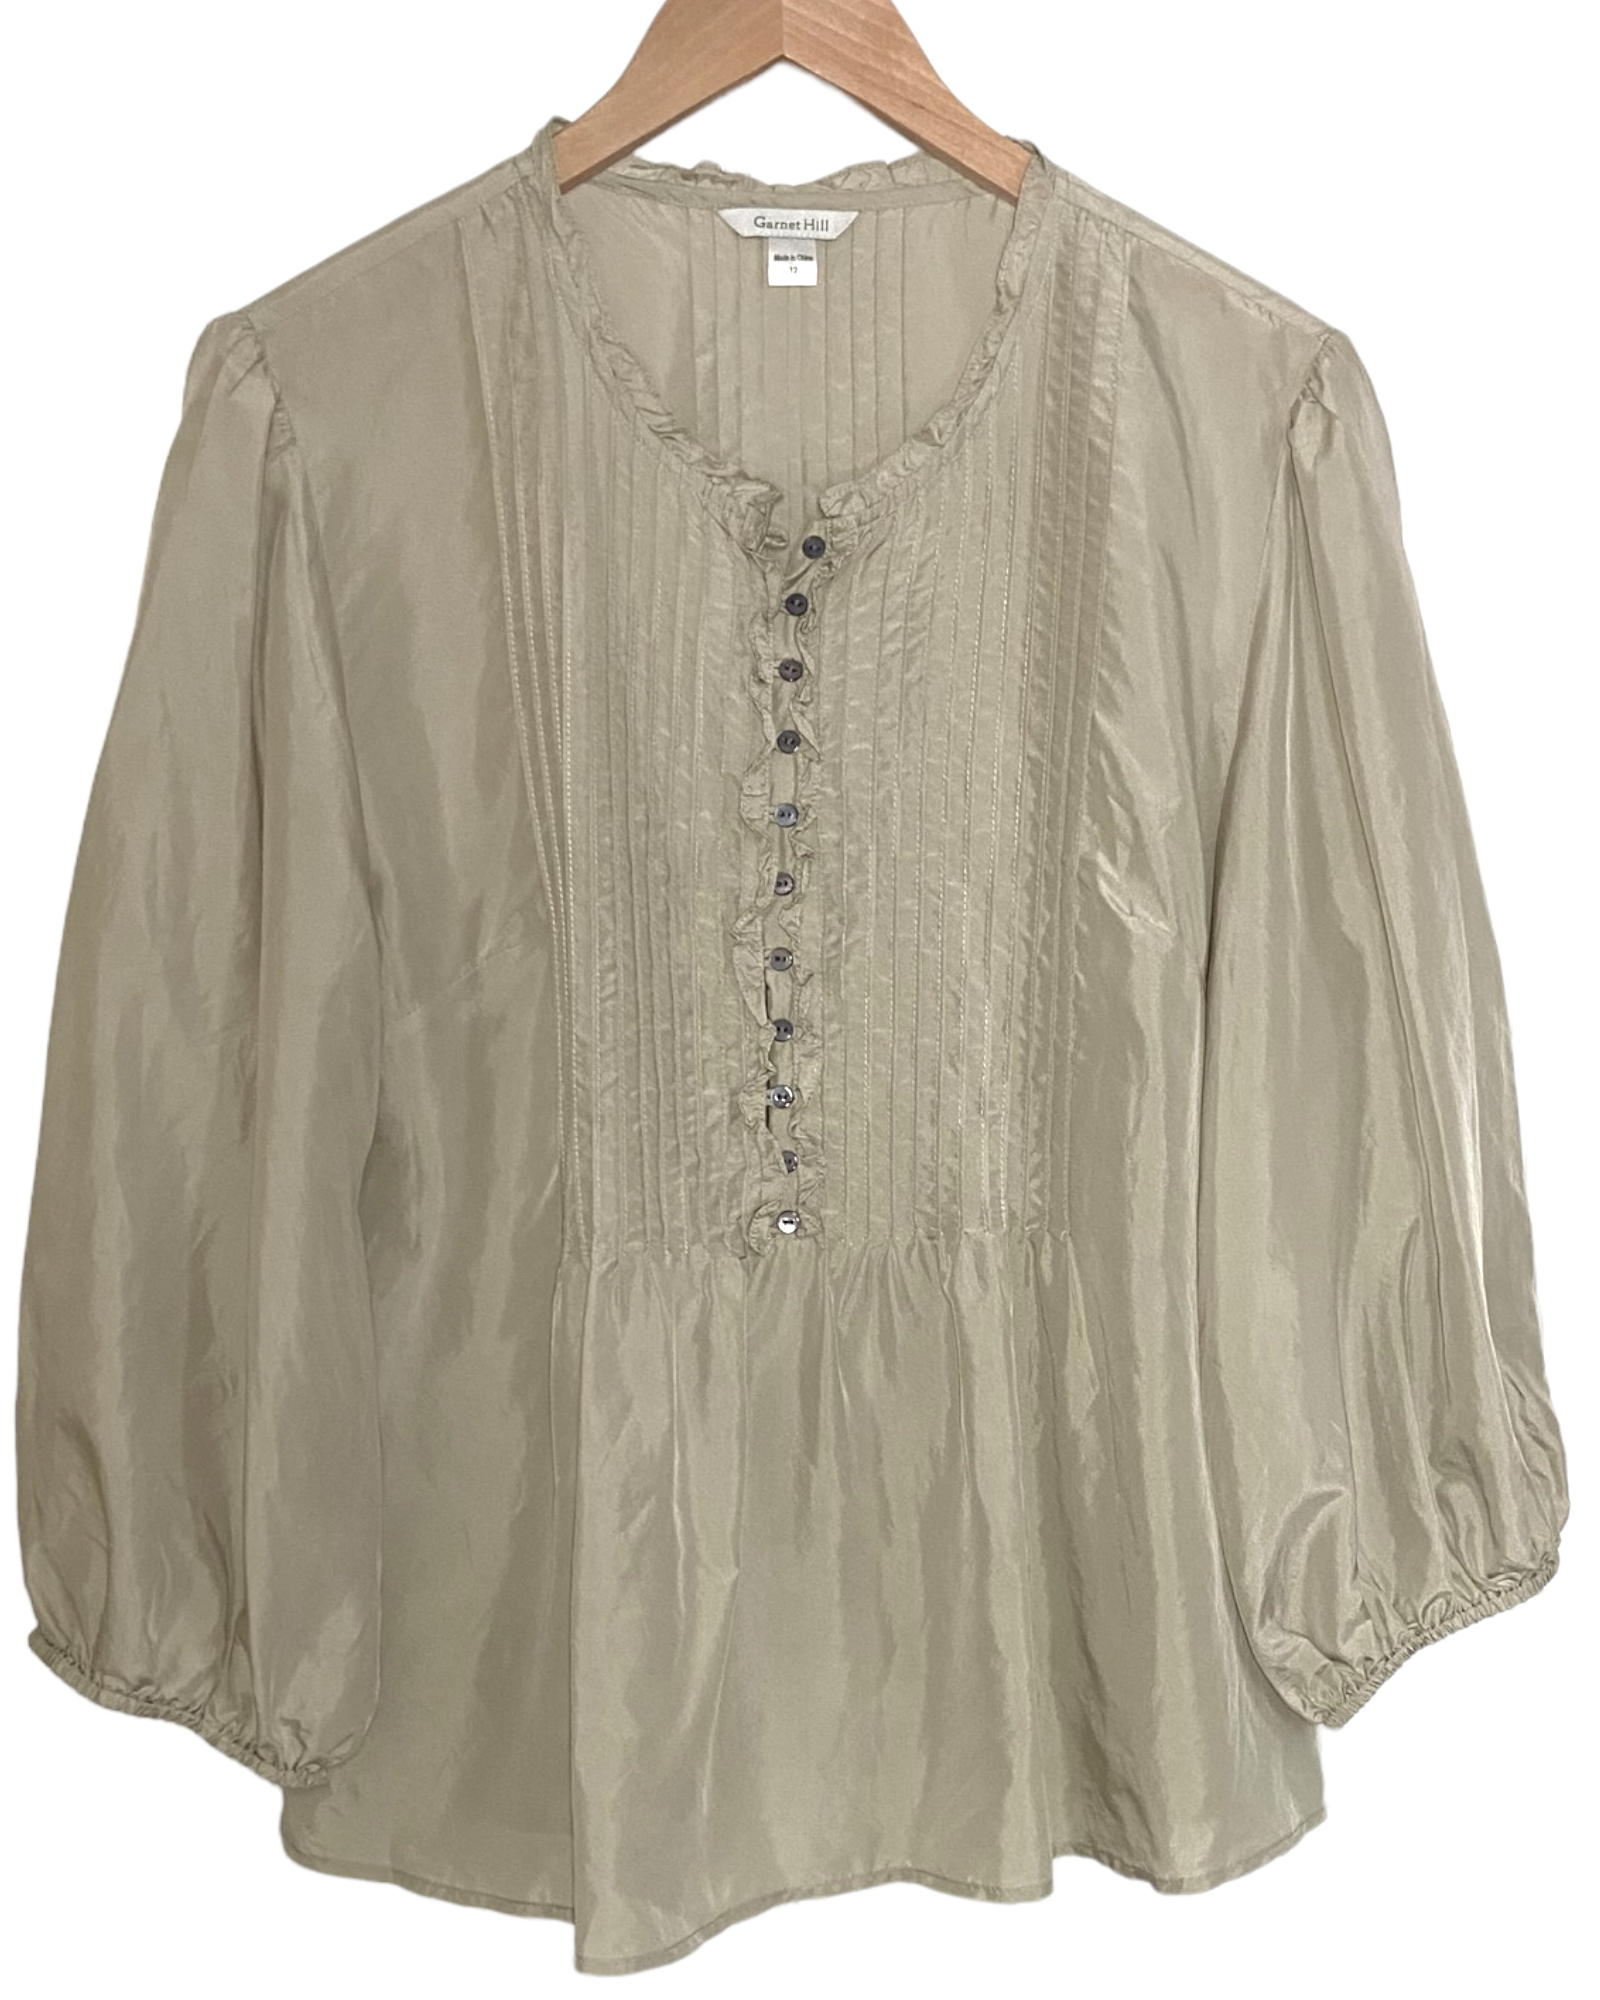 Dark Autumn GARNETT HILL silk ruffle pleated button blouse top